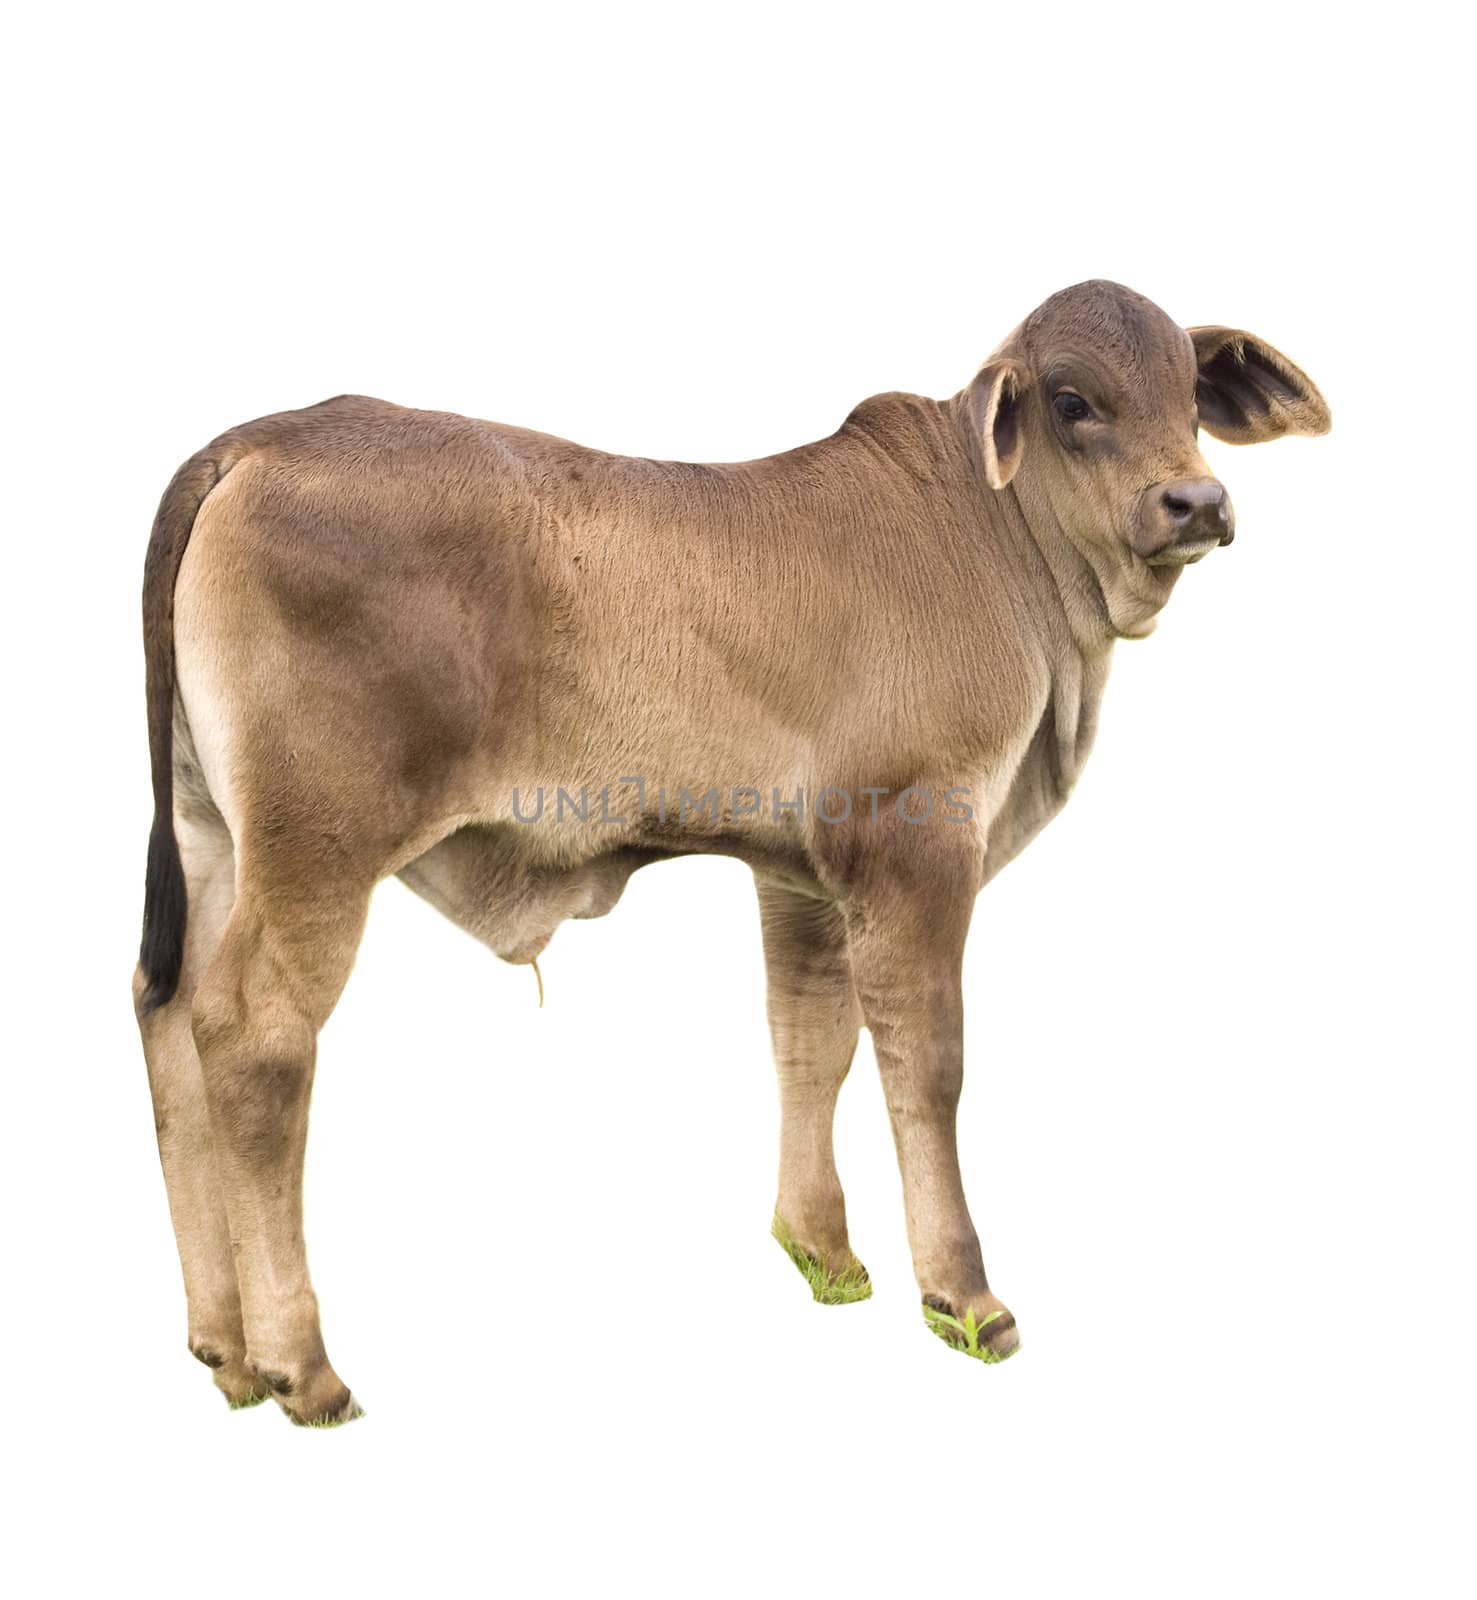 young bull calf australian beef cattle by sherj